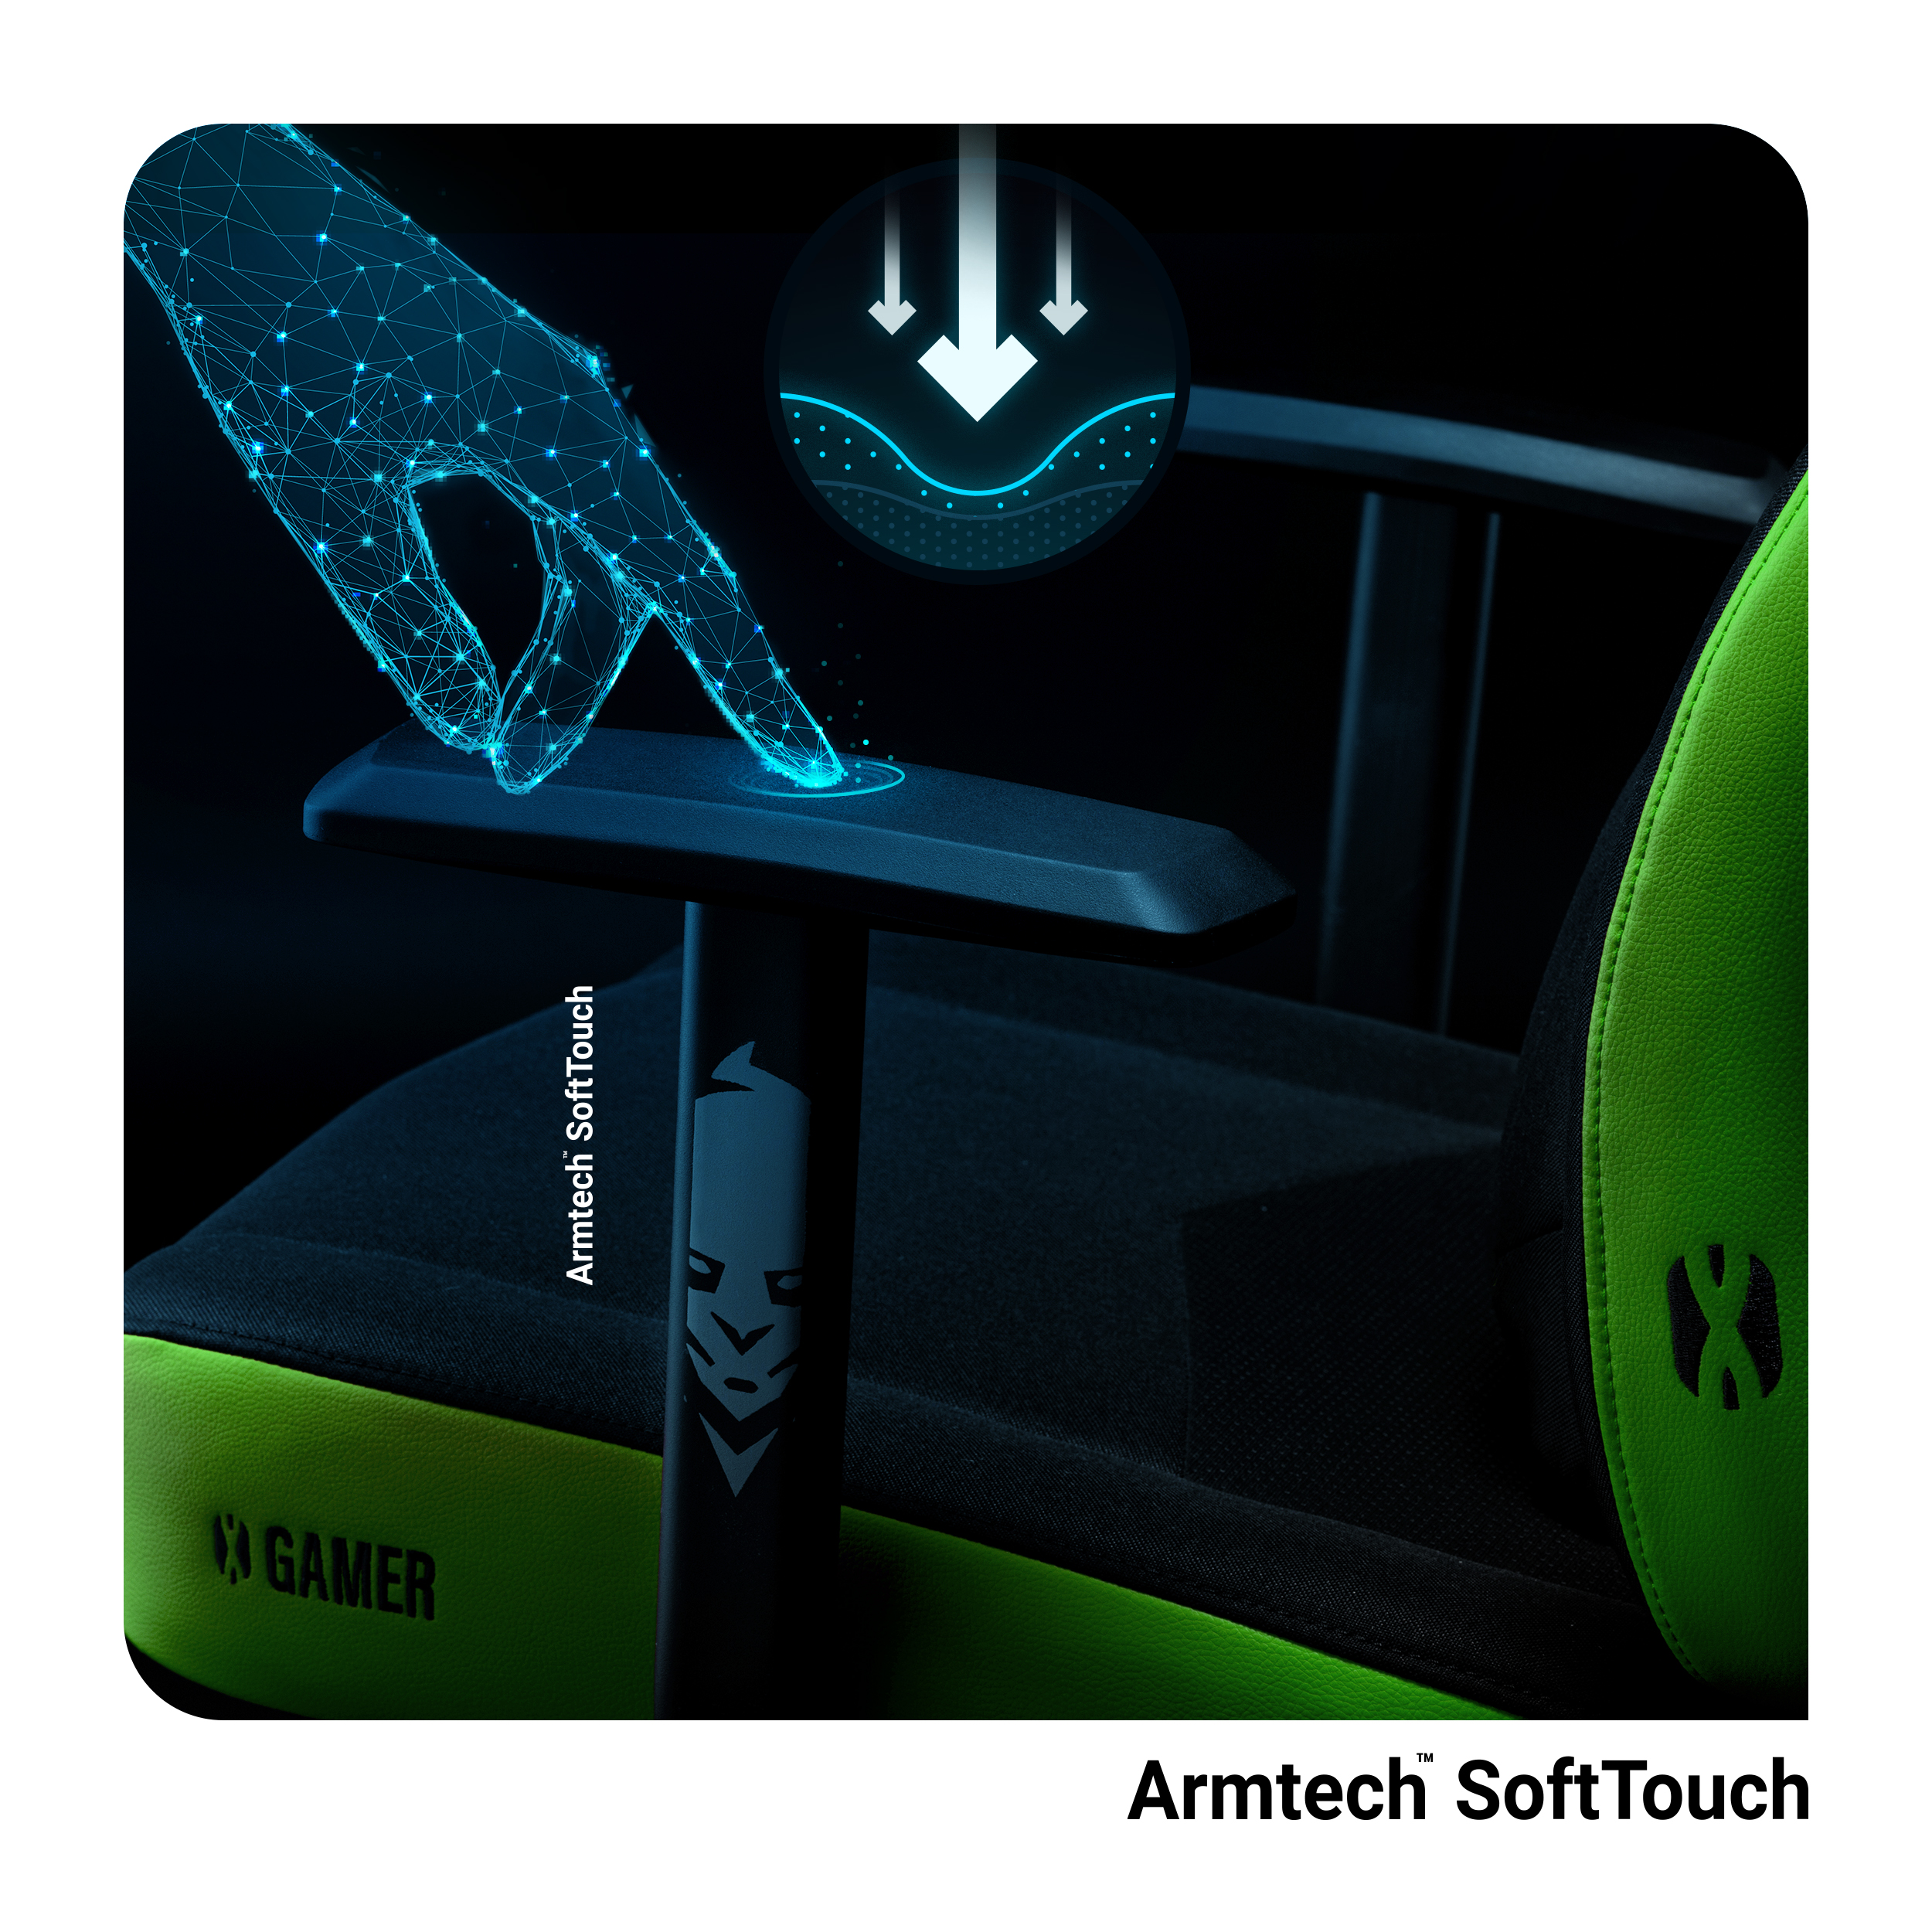 DIABLO CHAIRS GAMING black/green STUHL X-GAMER 2.0 NORMAL Gaming Chair